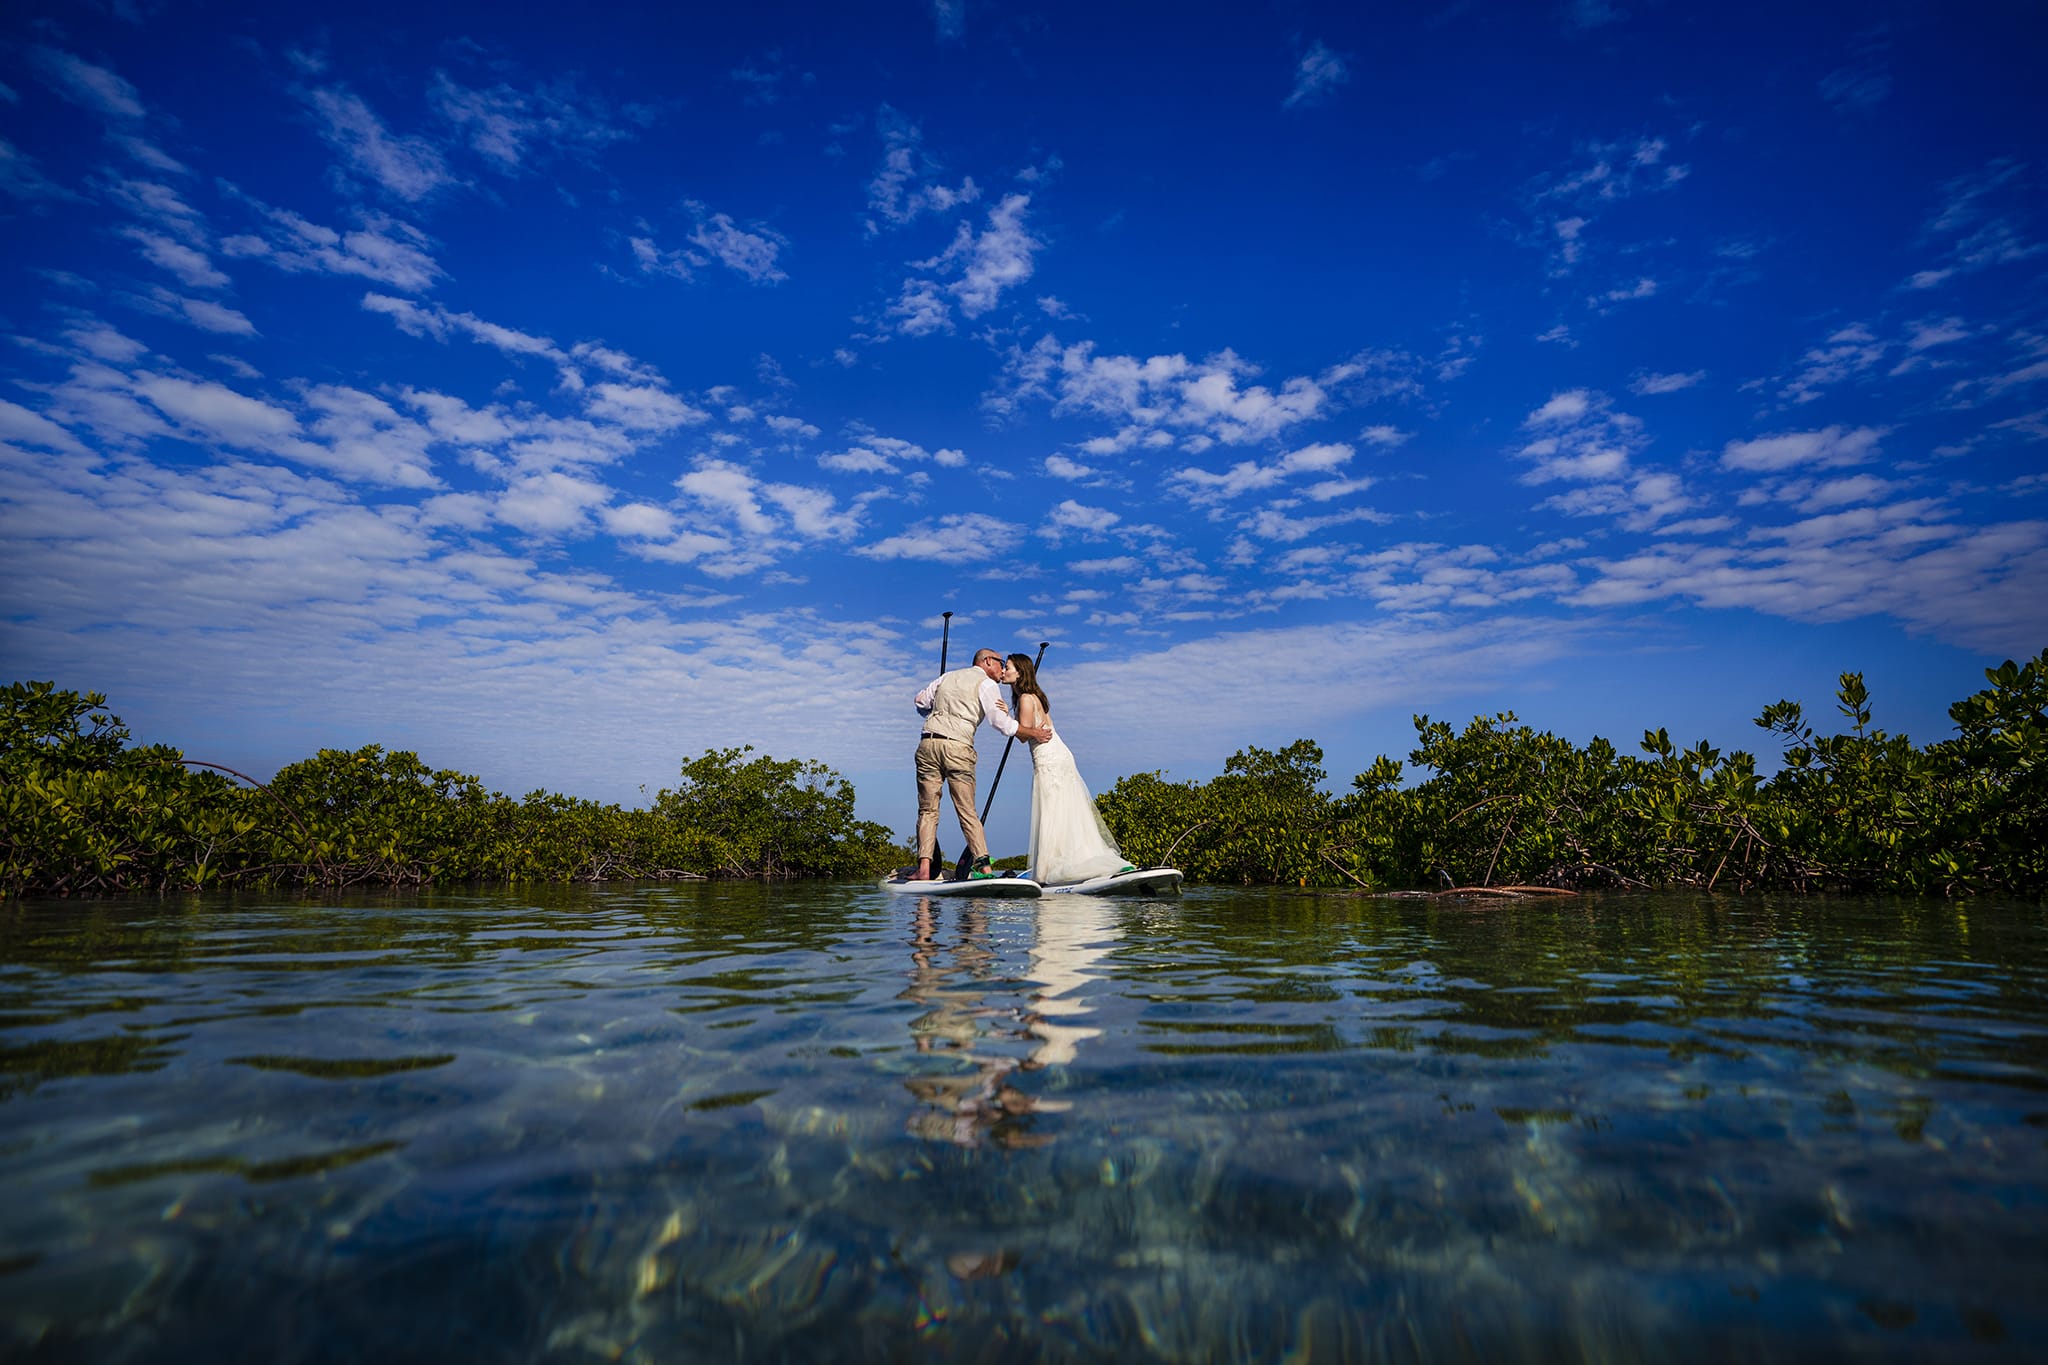 Adventure Wedding Photos - Elopements in Turks & Caicos - Studio 22 Photography